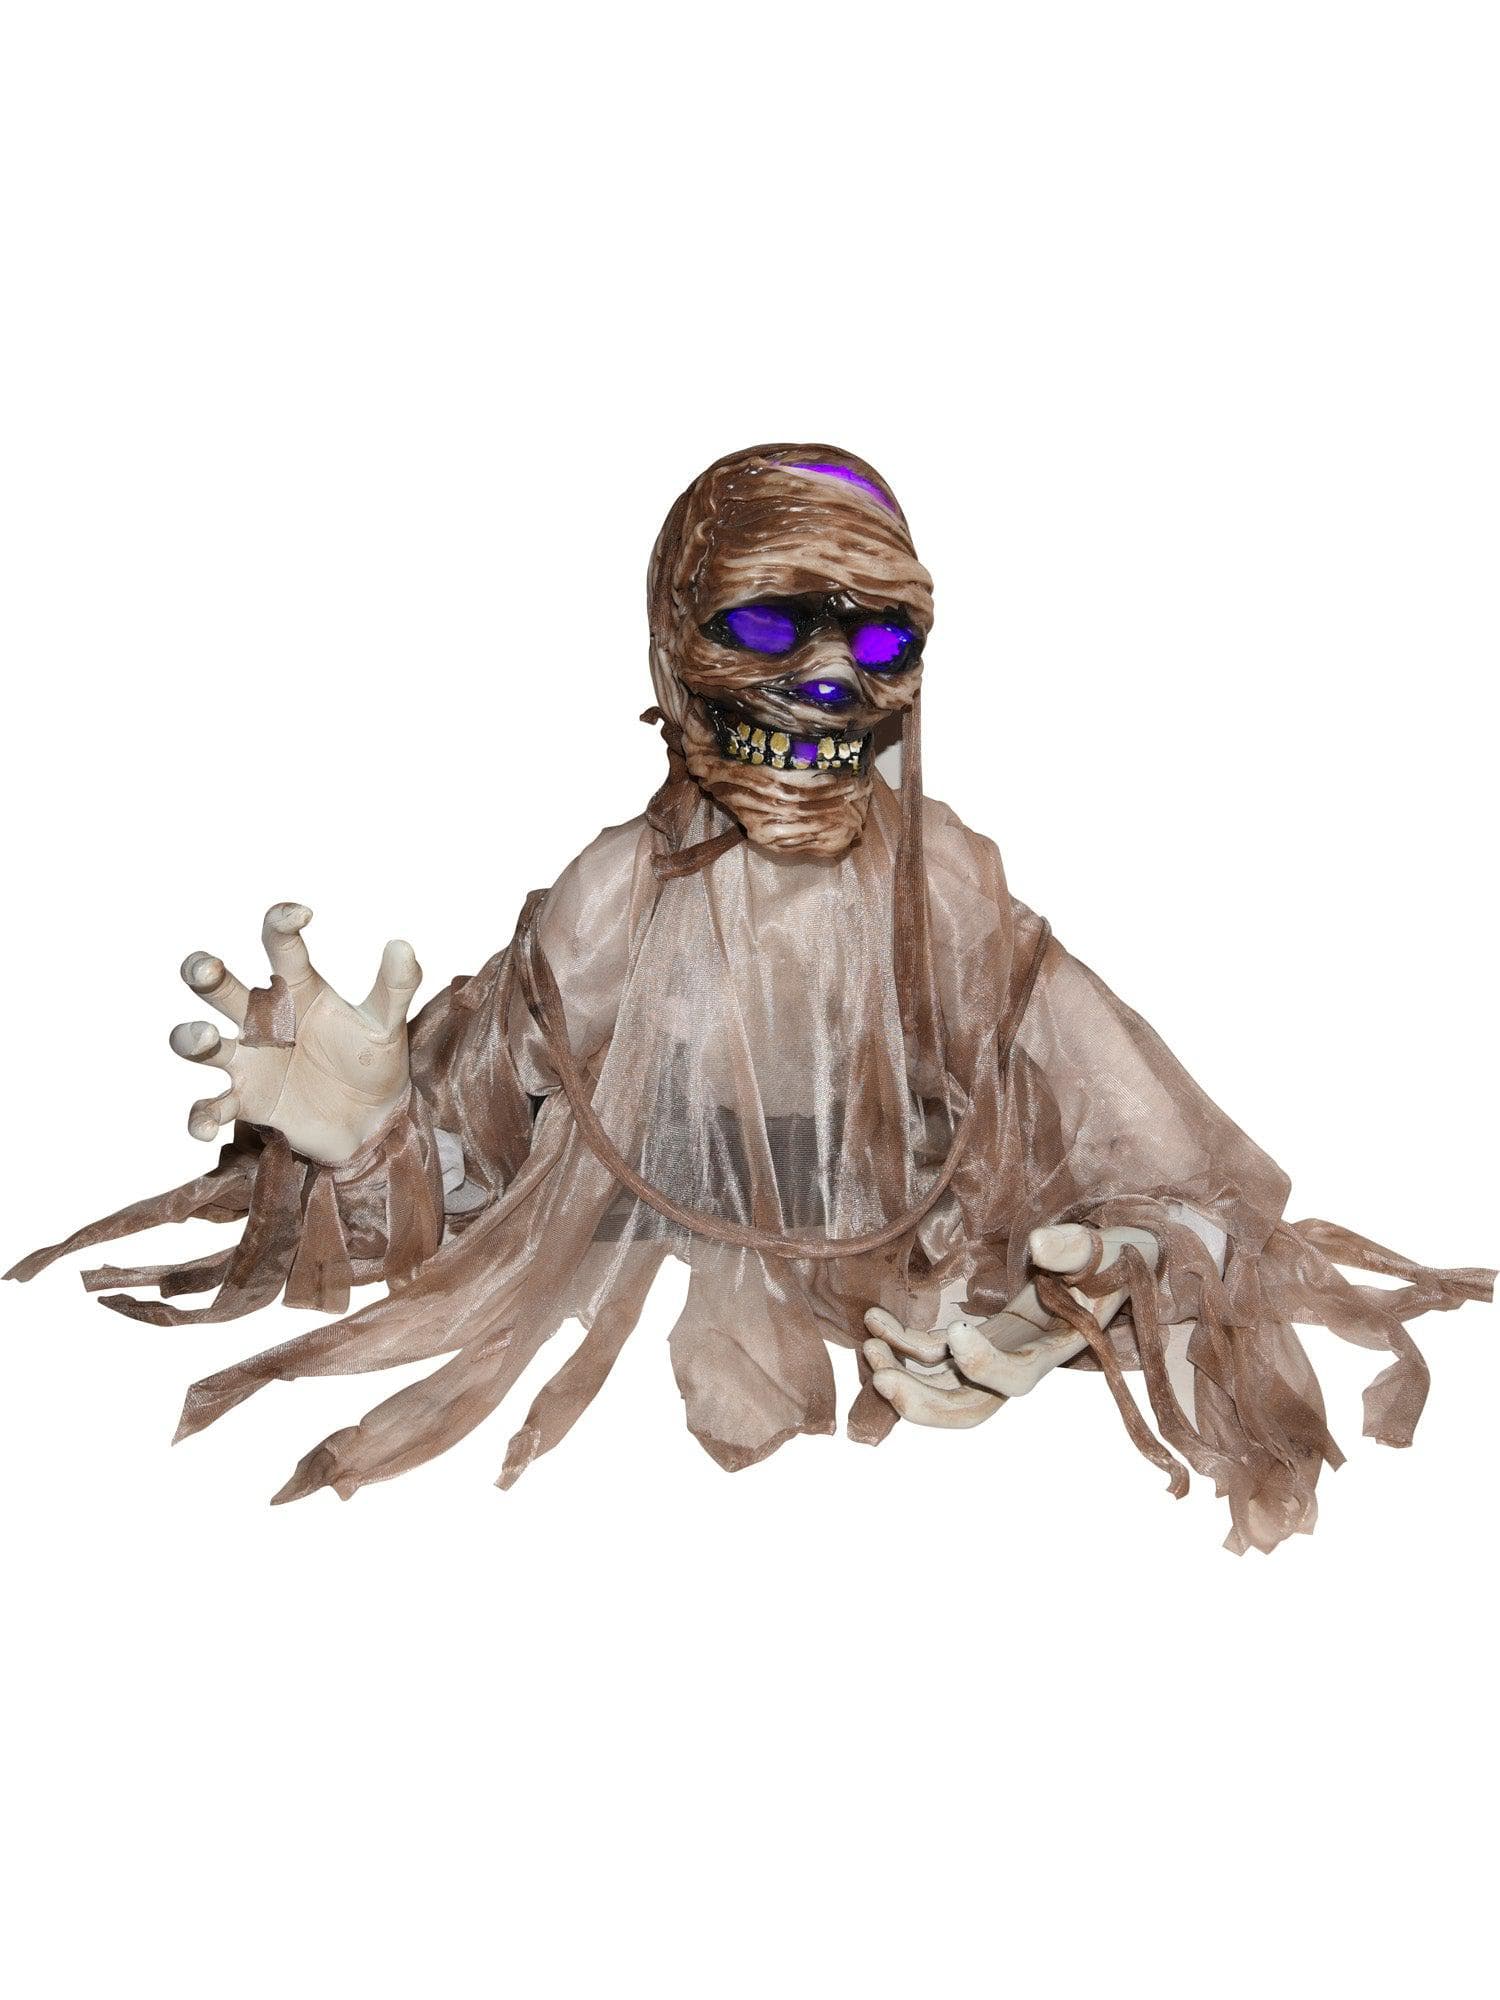 4 Foot Skeleton Mummy Groundbreaker Light Up Animated Prop - costumes.com